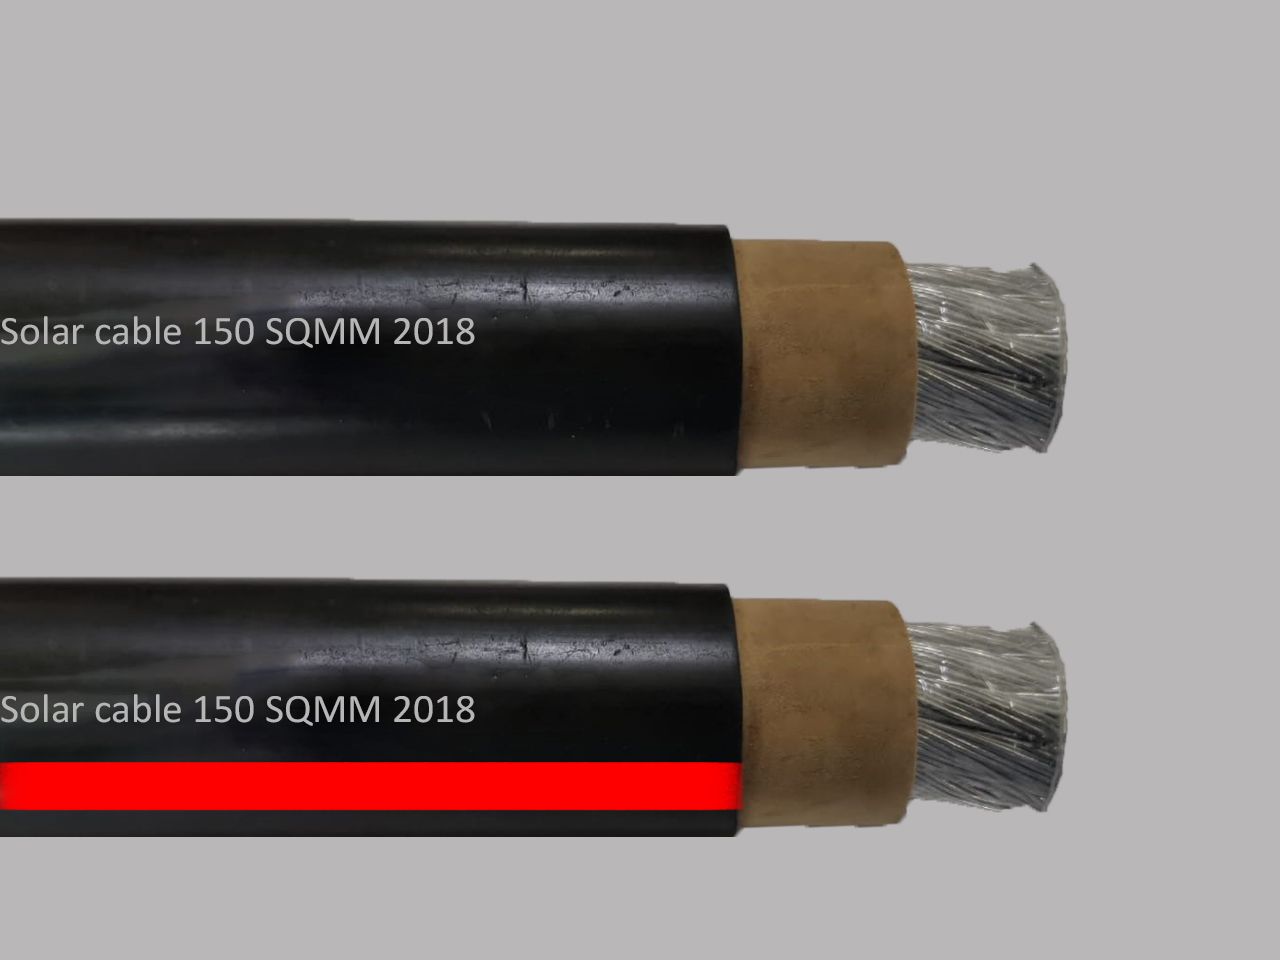 en-certified-dc-solar-cable-150sqm-500mtr-drum-red_1.jpg